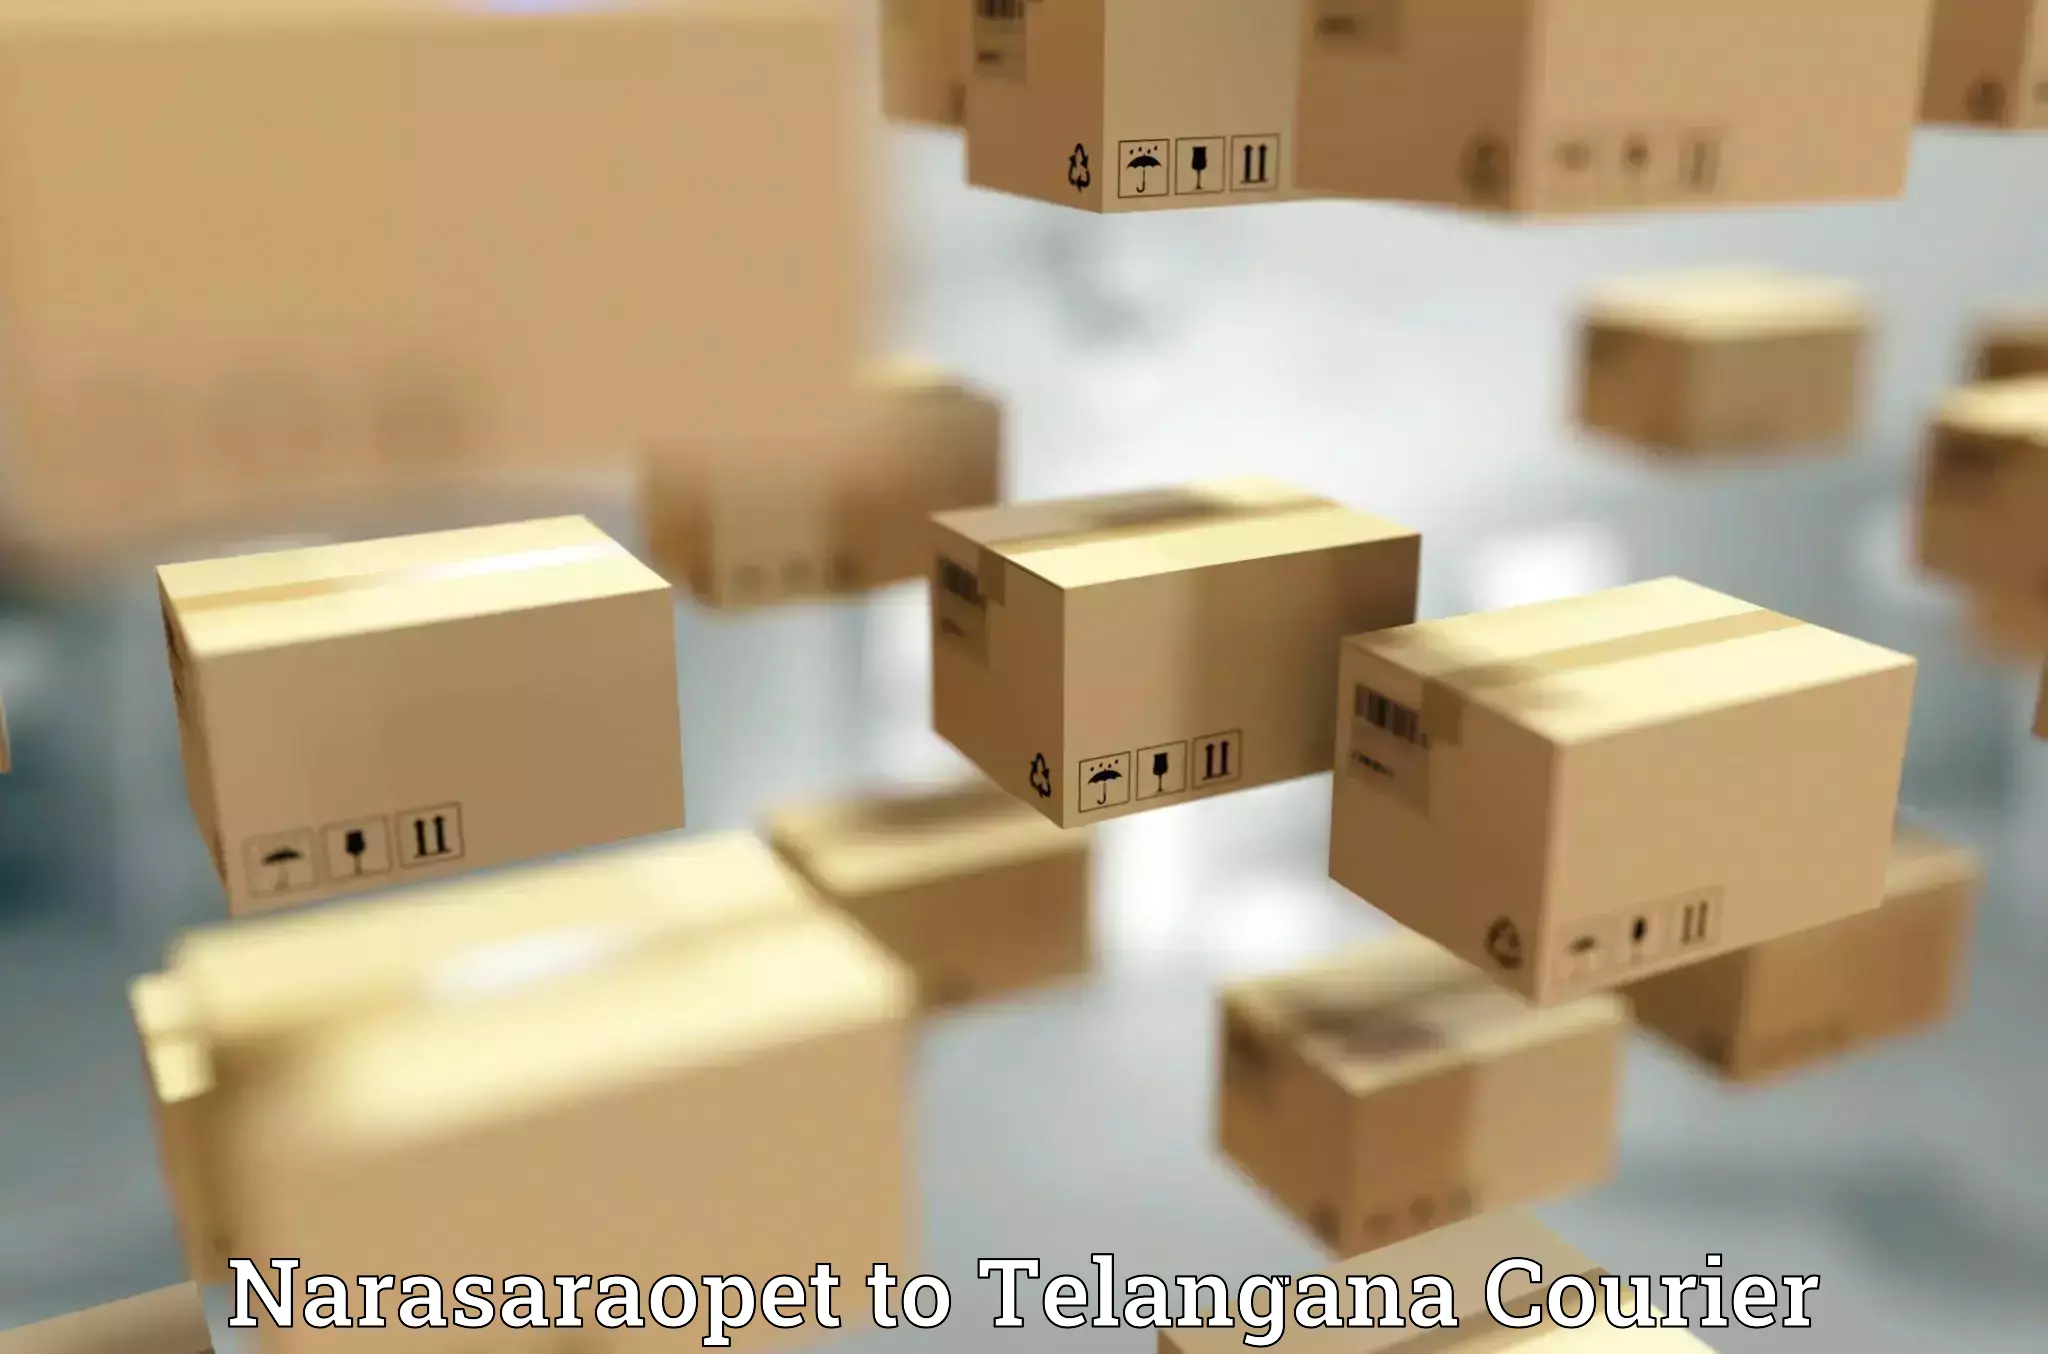 Enhanced tracking features in Narasaraopet to Telangana